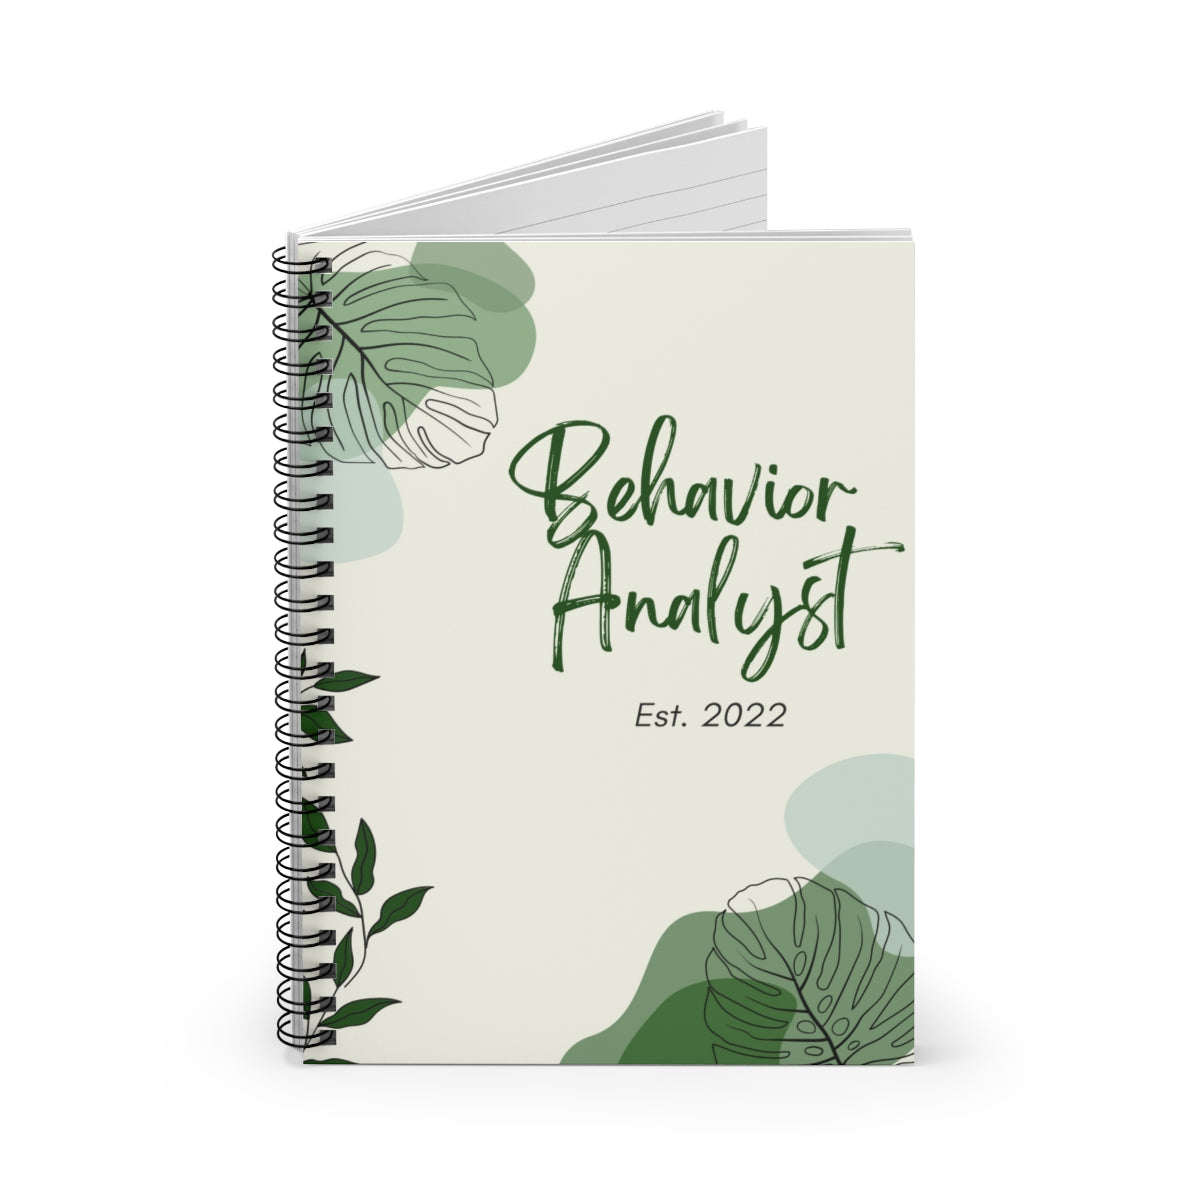 Behavior Analyst Est. 2022 Spiral Notebook - Ruled Line